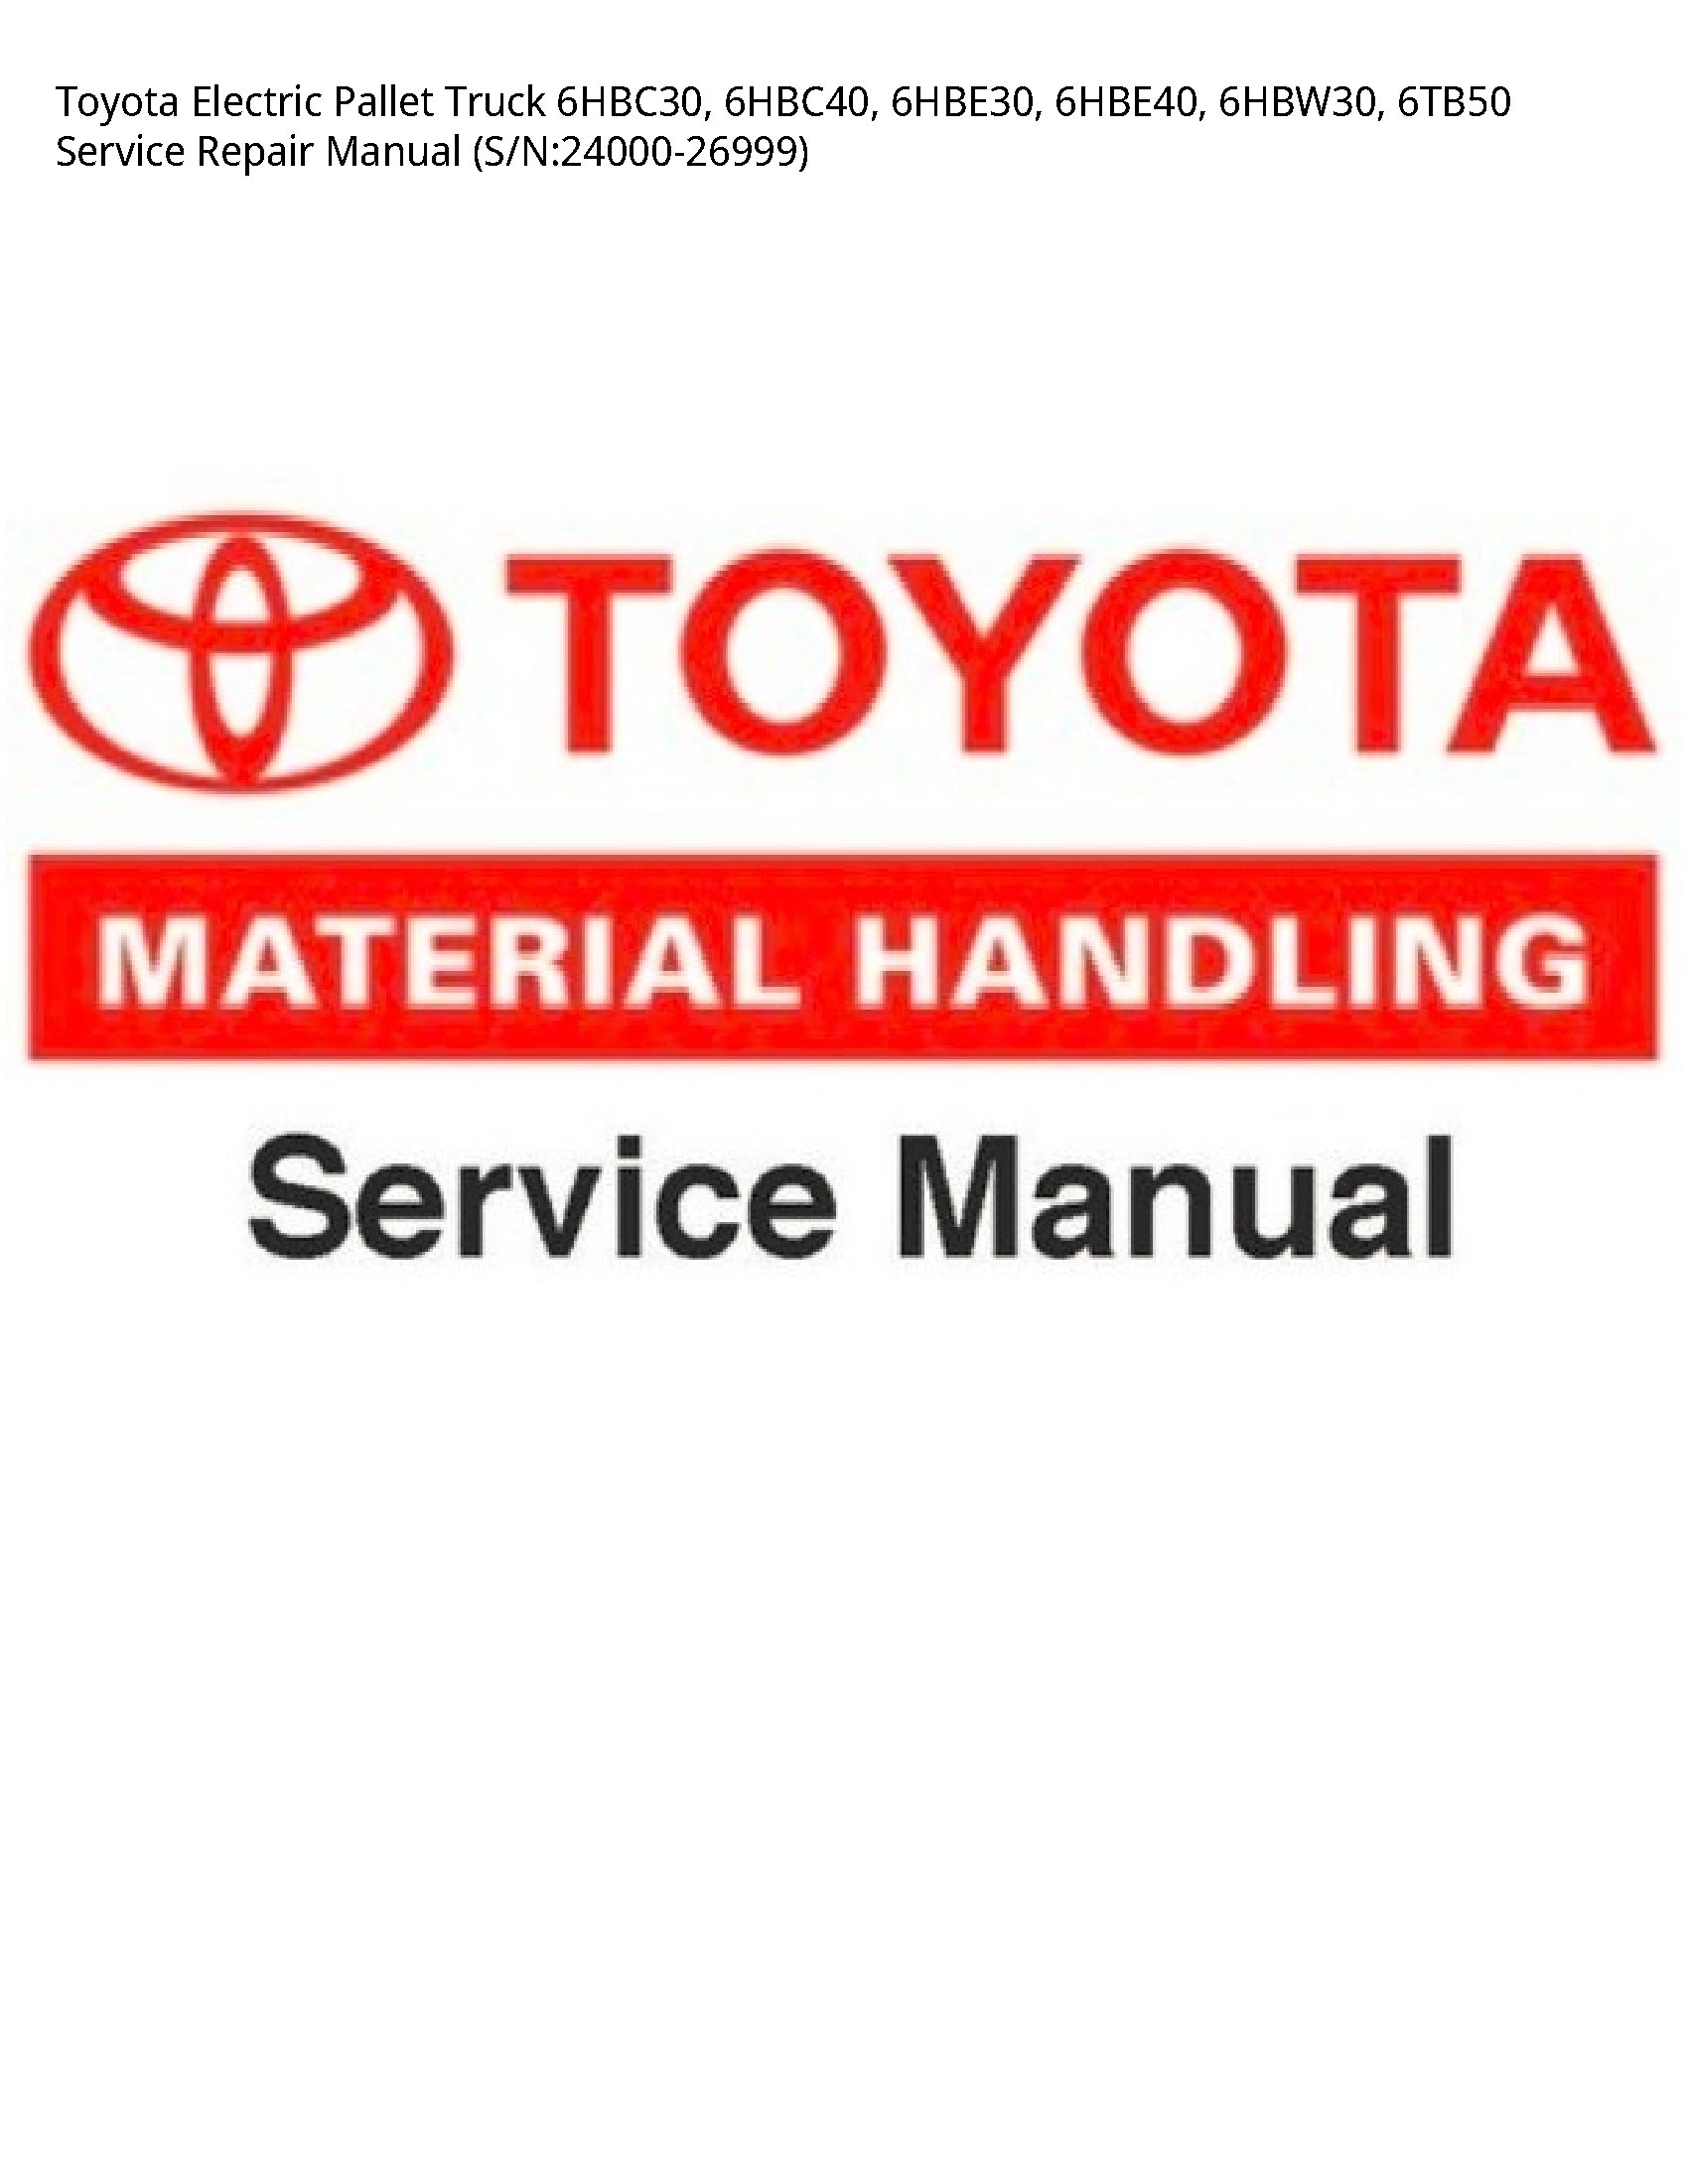 Toyota 6HBC30 Electric Pallet Truck manual